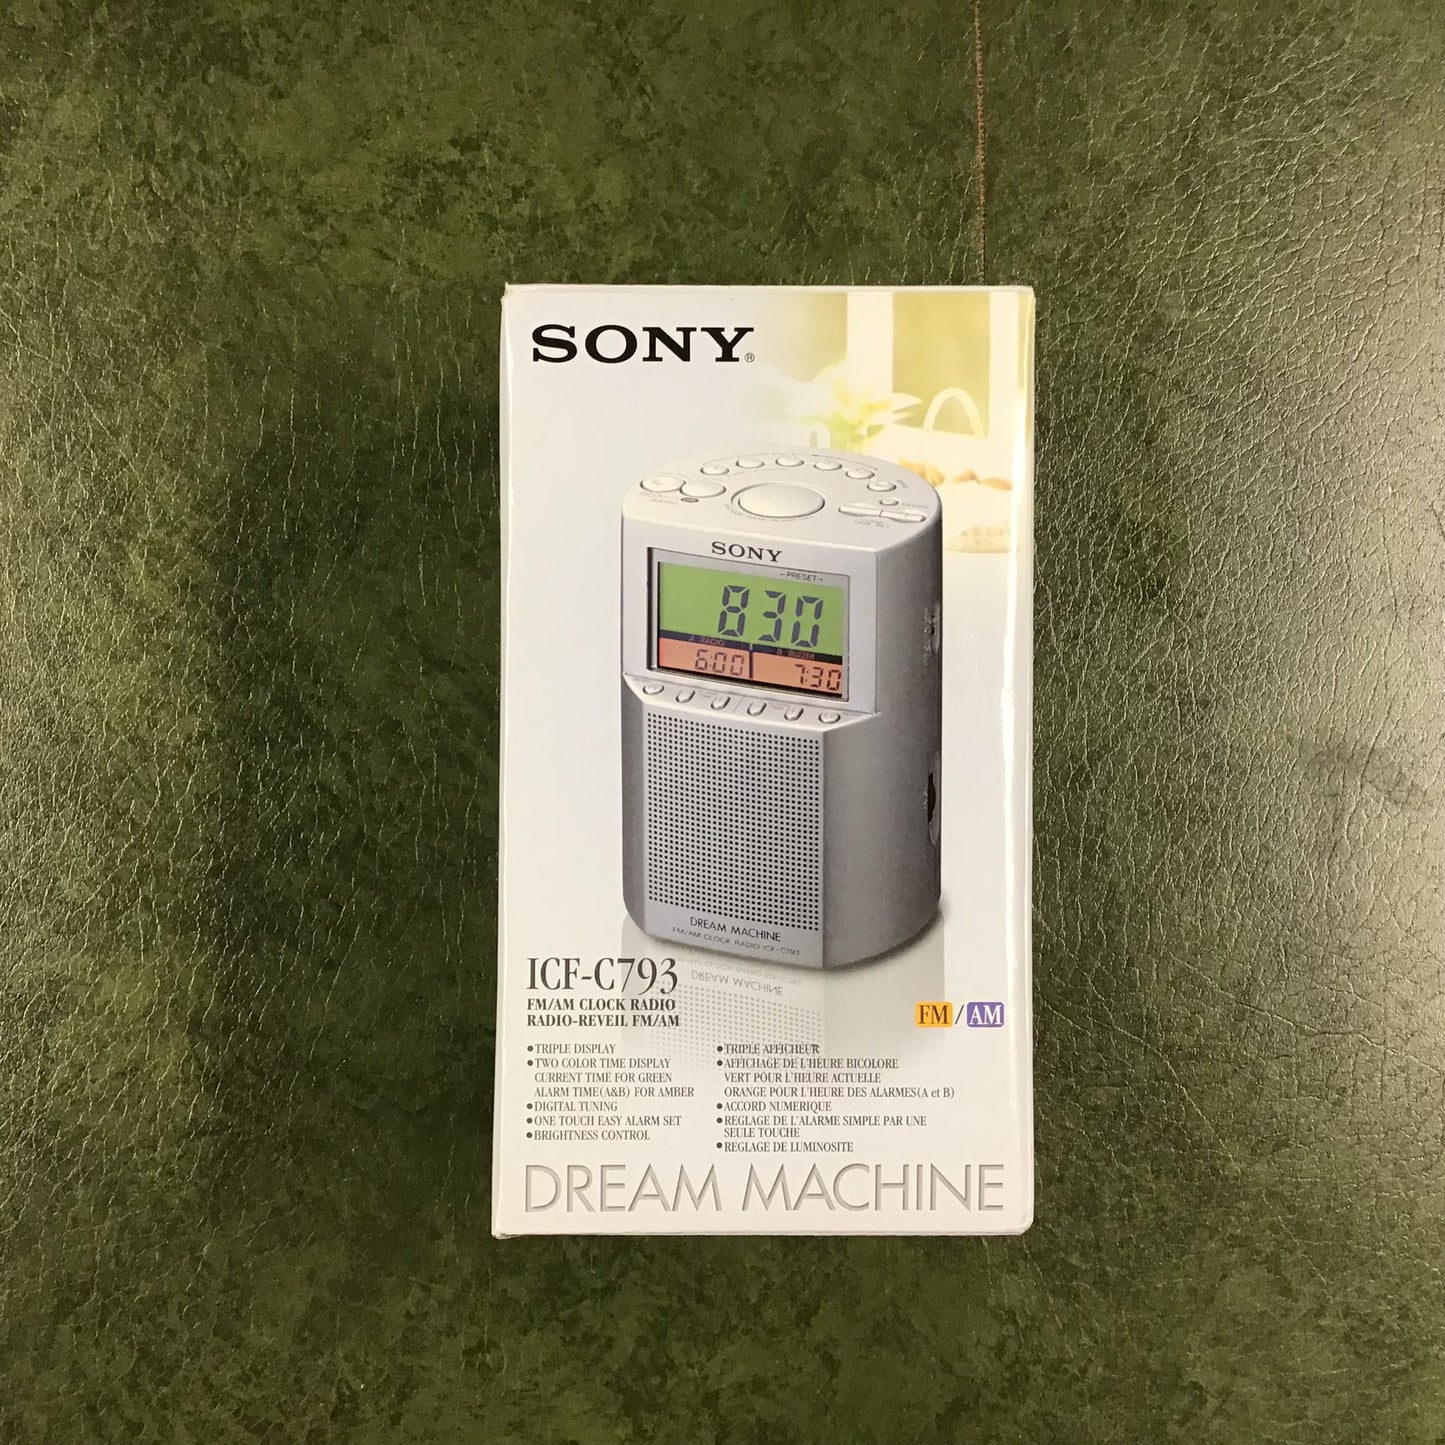 Sony Dream Machine ICF-C793 Alarm clock